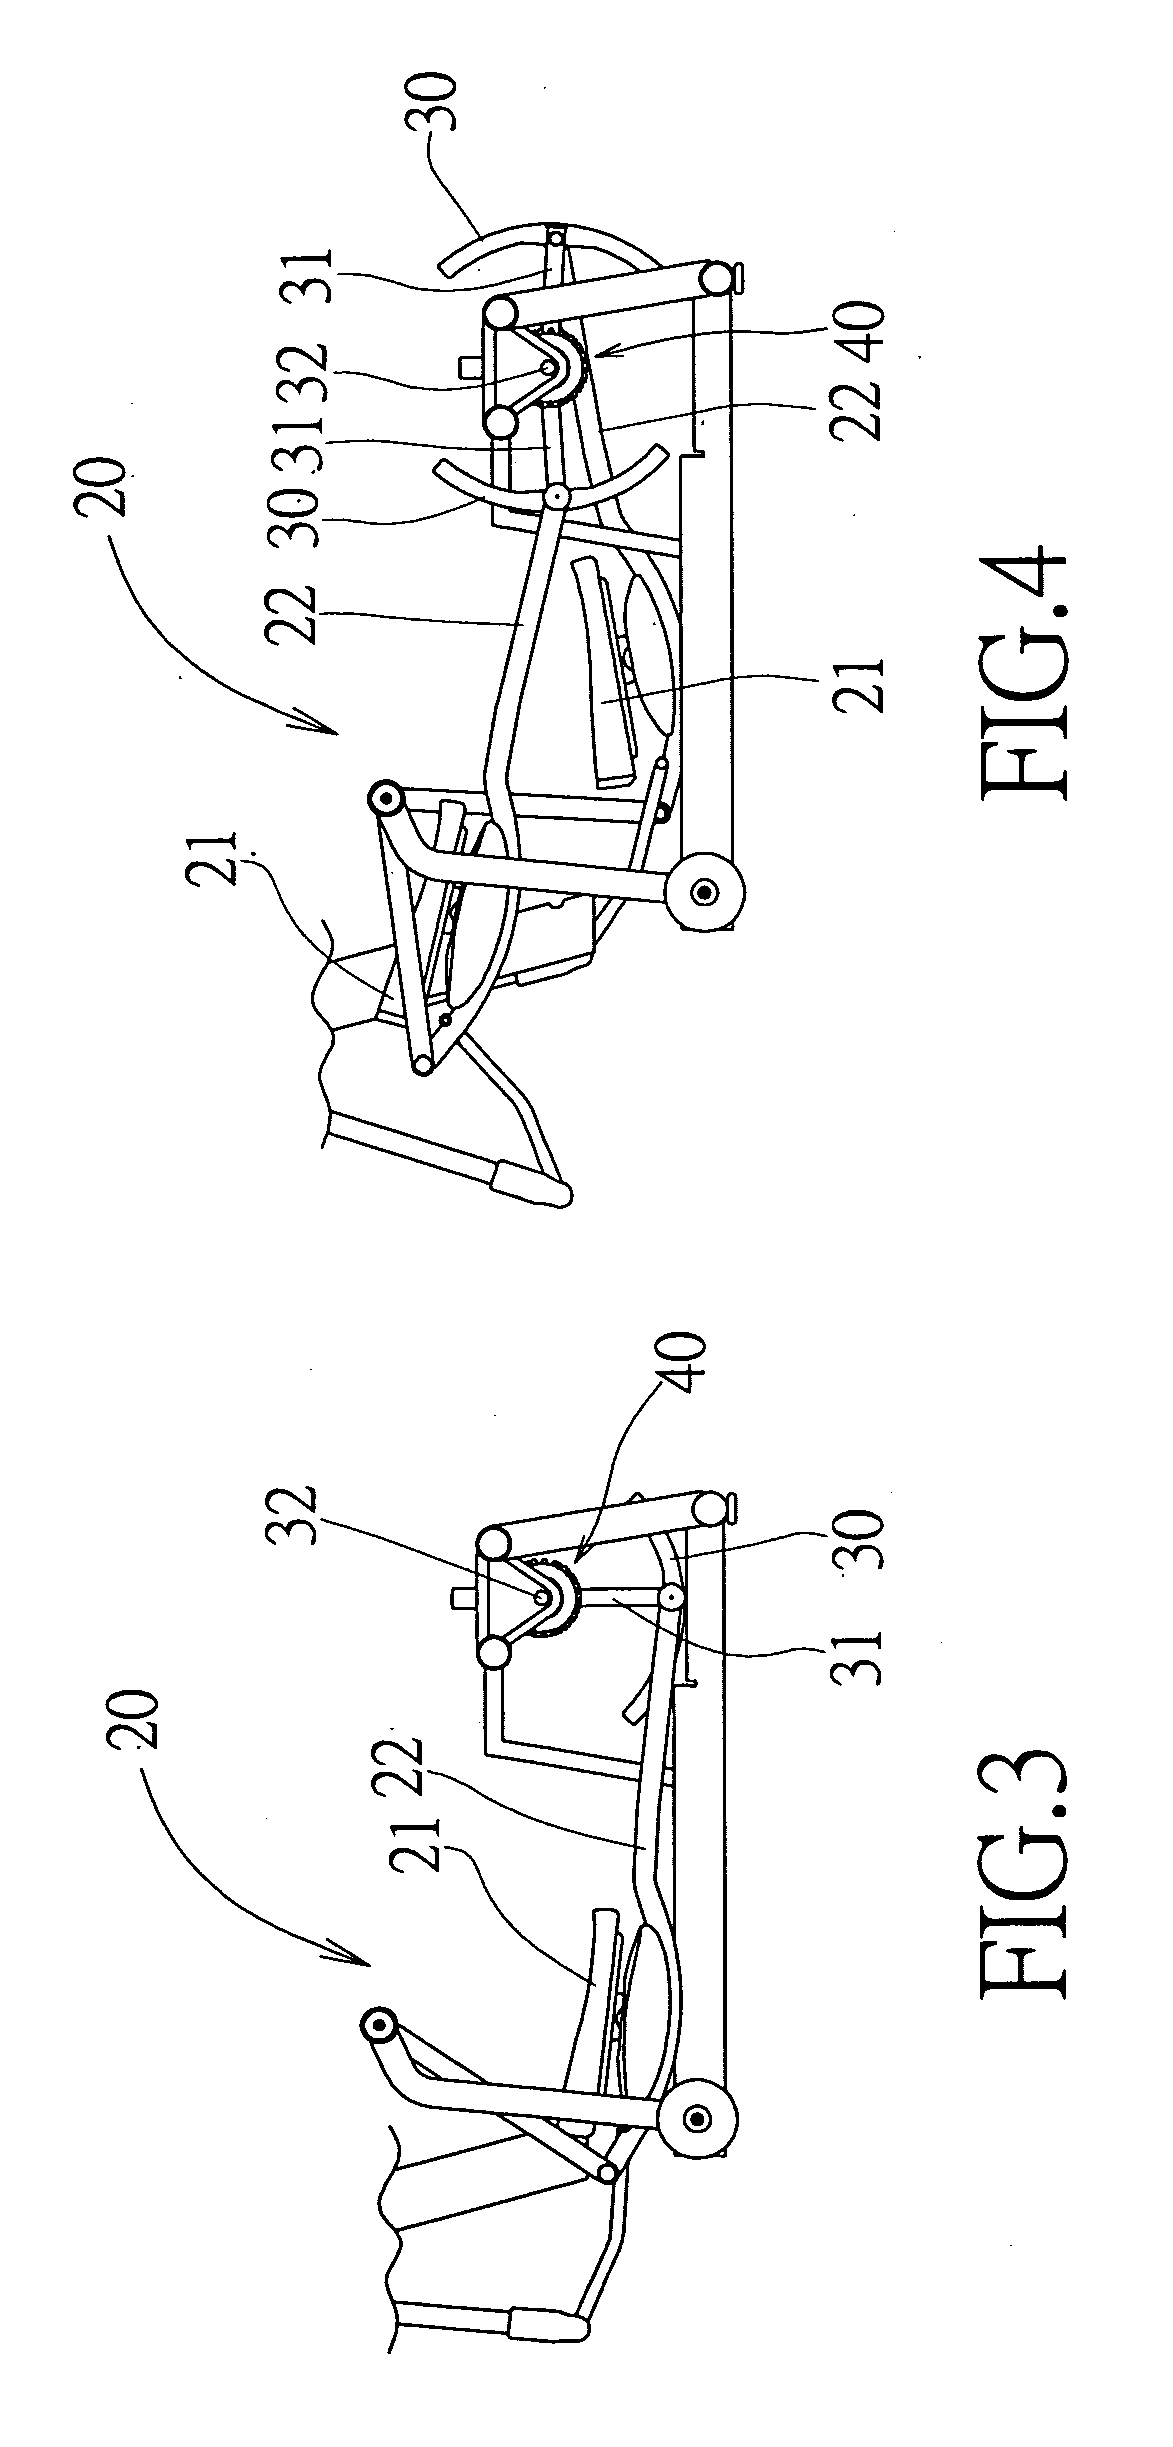 Inertia load mechanism of a reciprocating exercise equipment